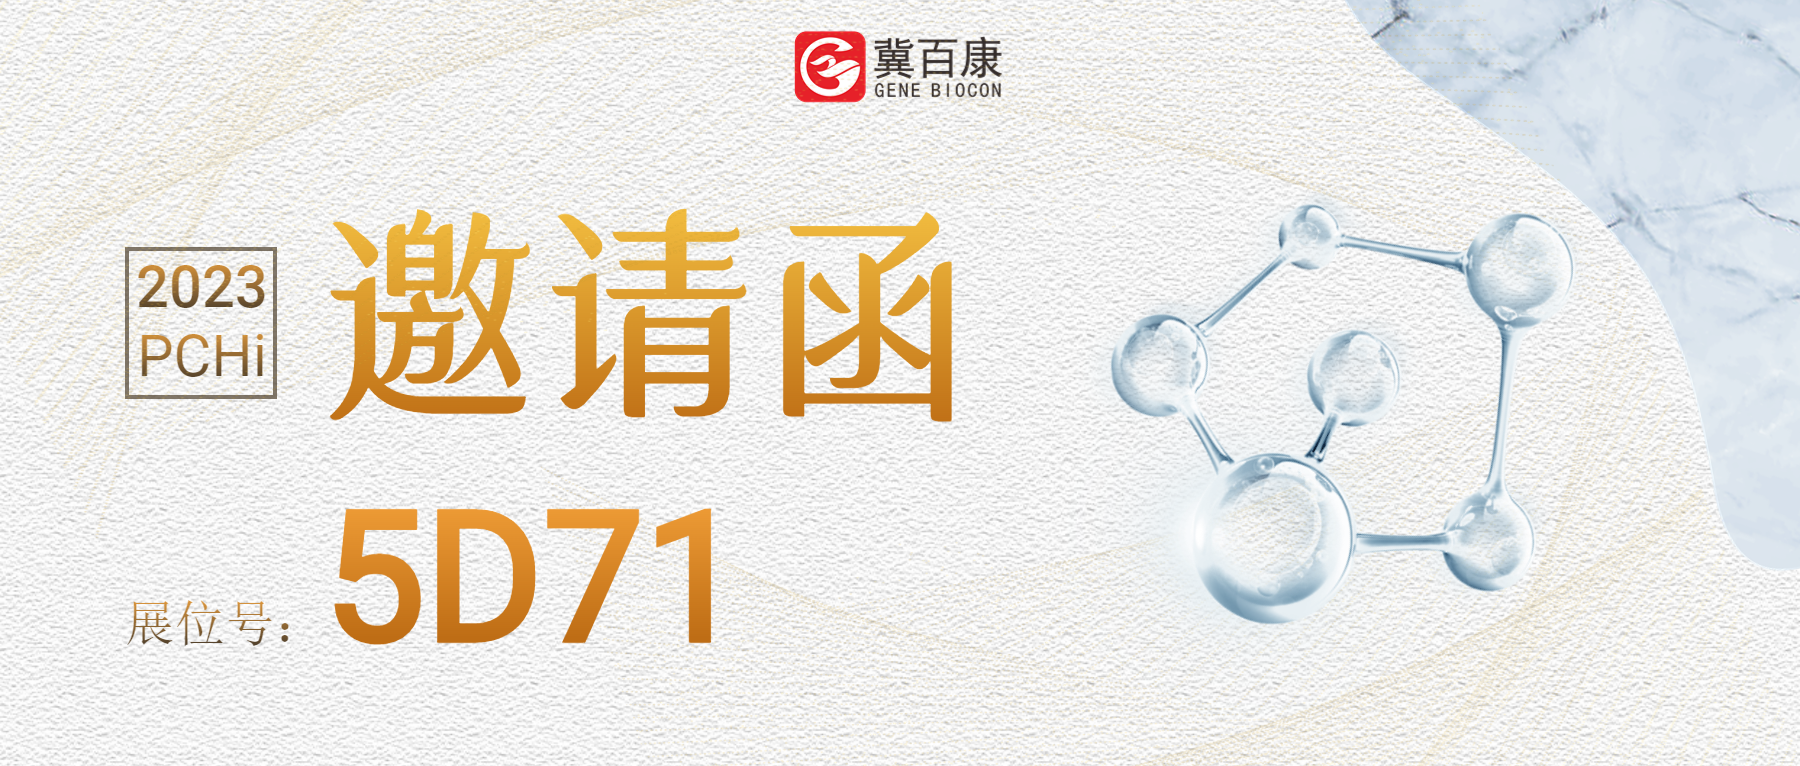 2023PCHI丨冀百康生物与您相约广州